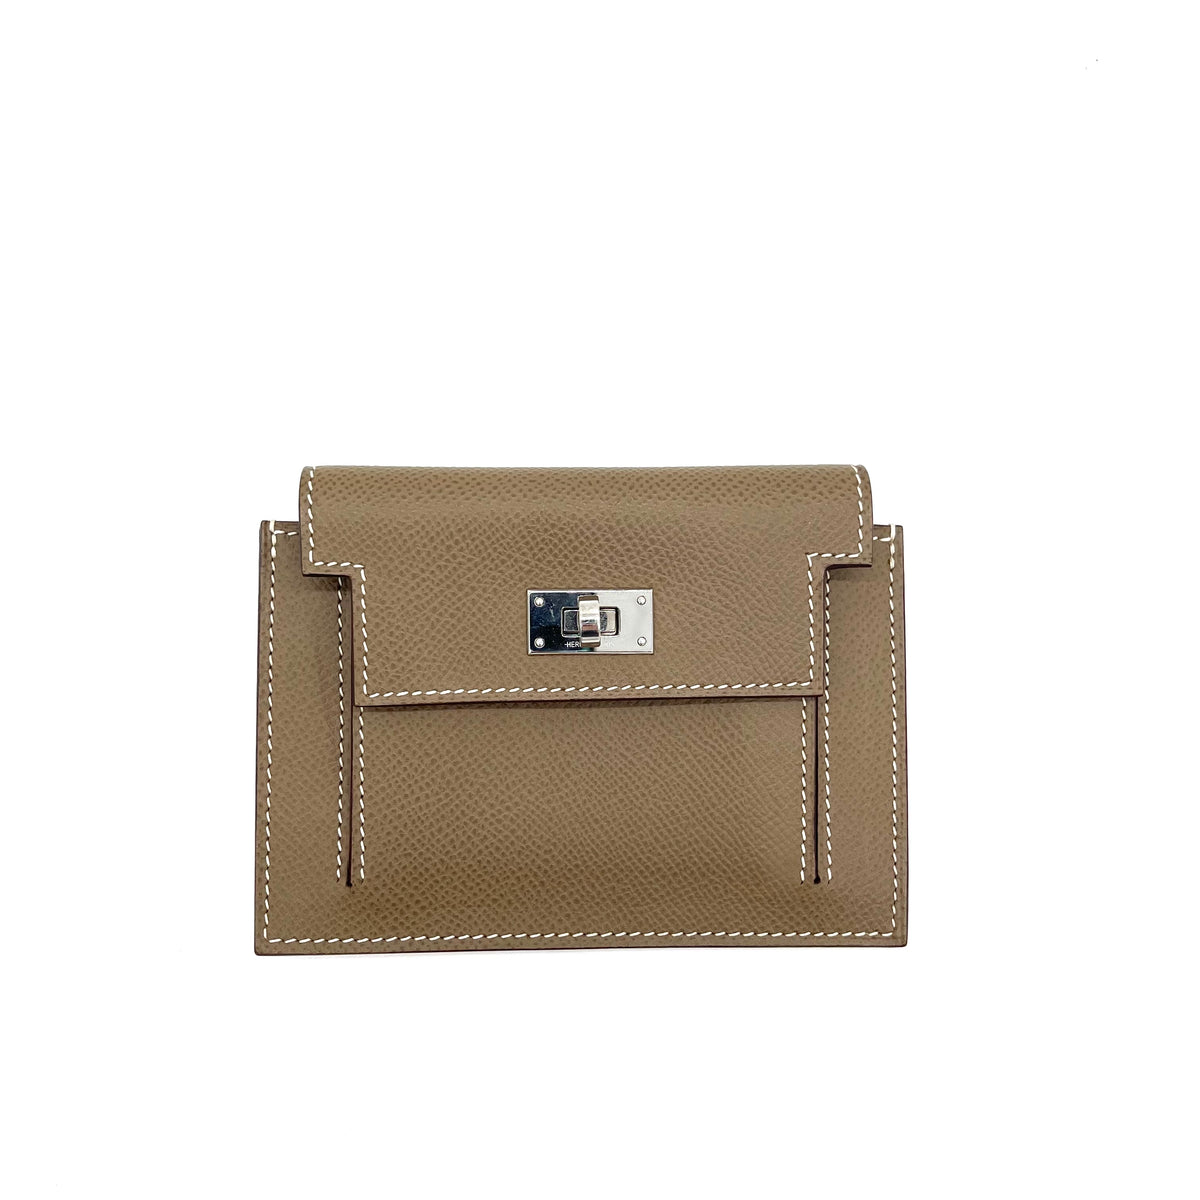 Pre-owned Hermes Celeste Epsom Leather Kelly Pocket Compact Wallet